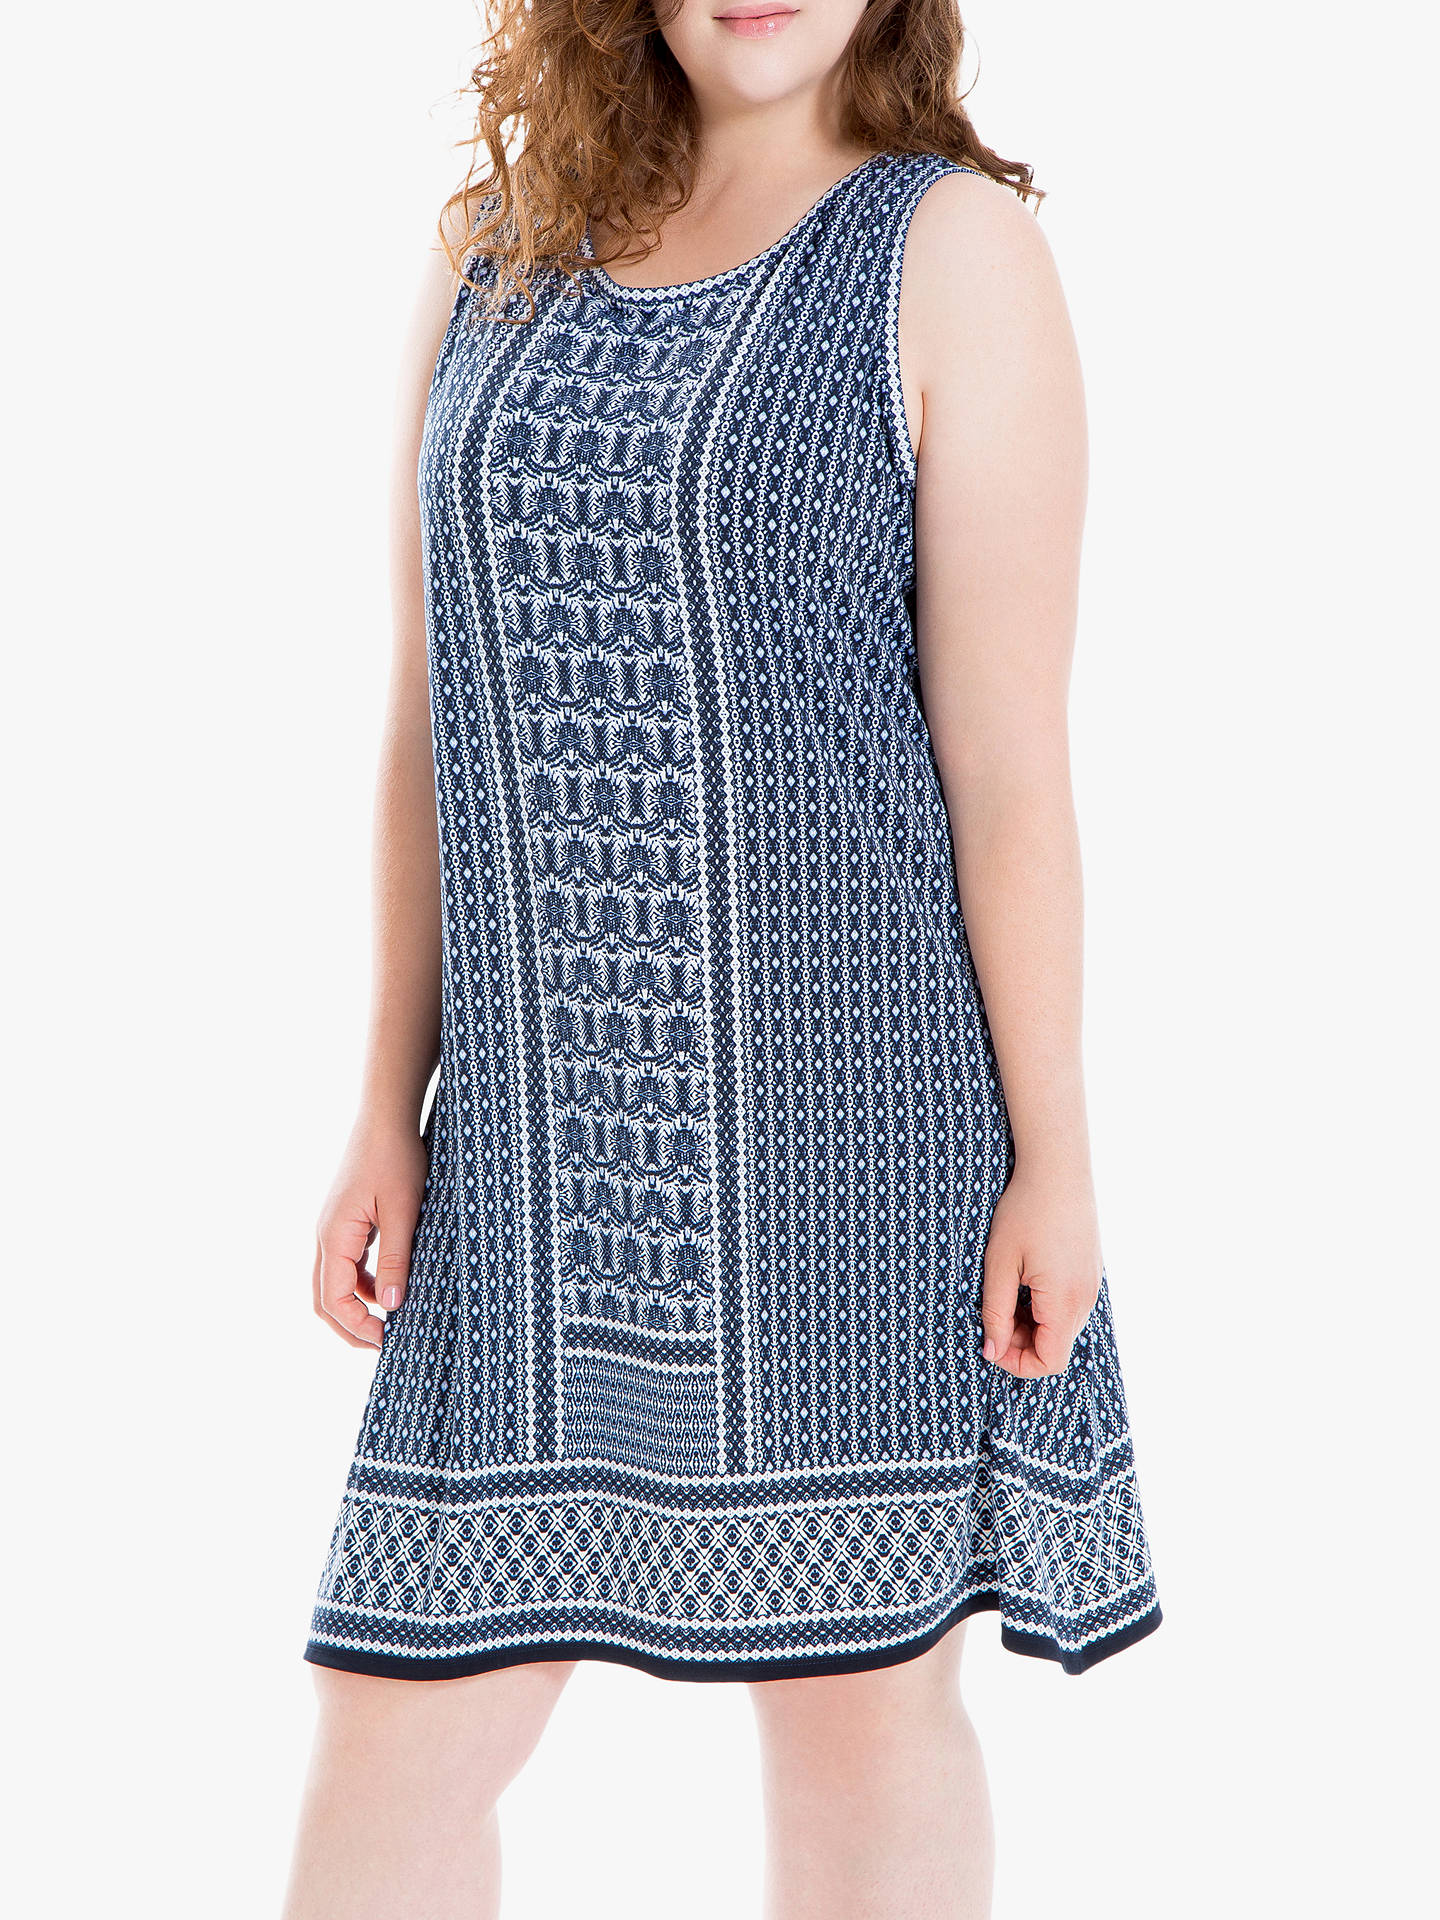 Max Studio + Printed Sleeveless Dress, Navy/Blue at John Lewis & Partners